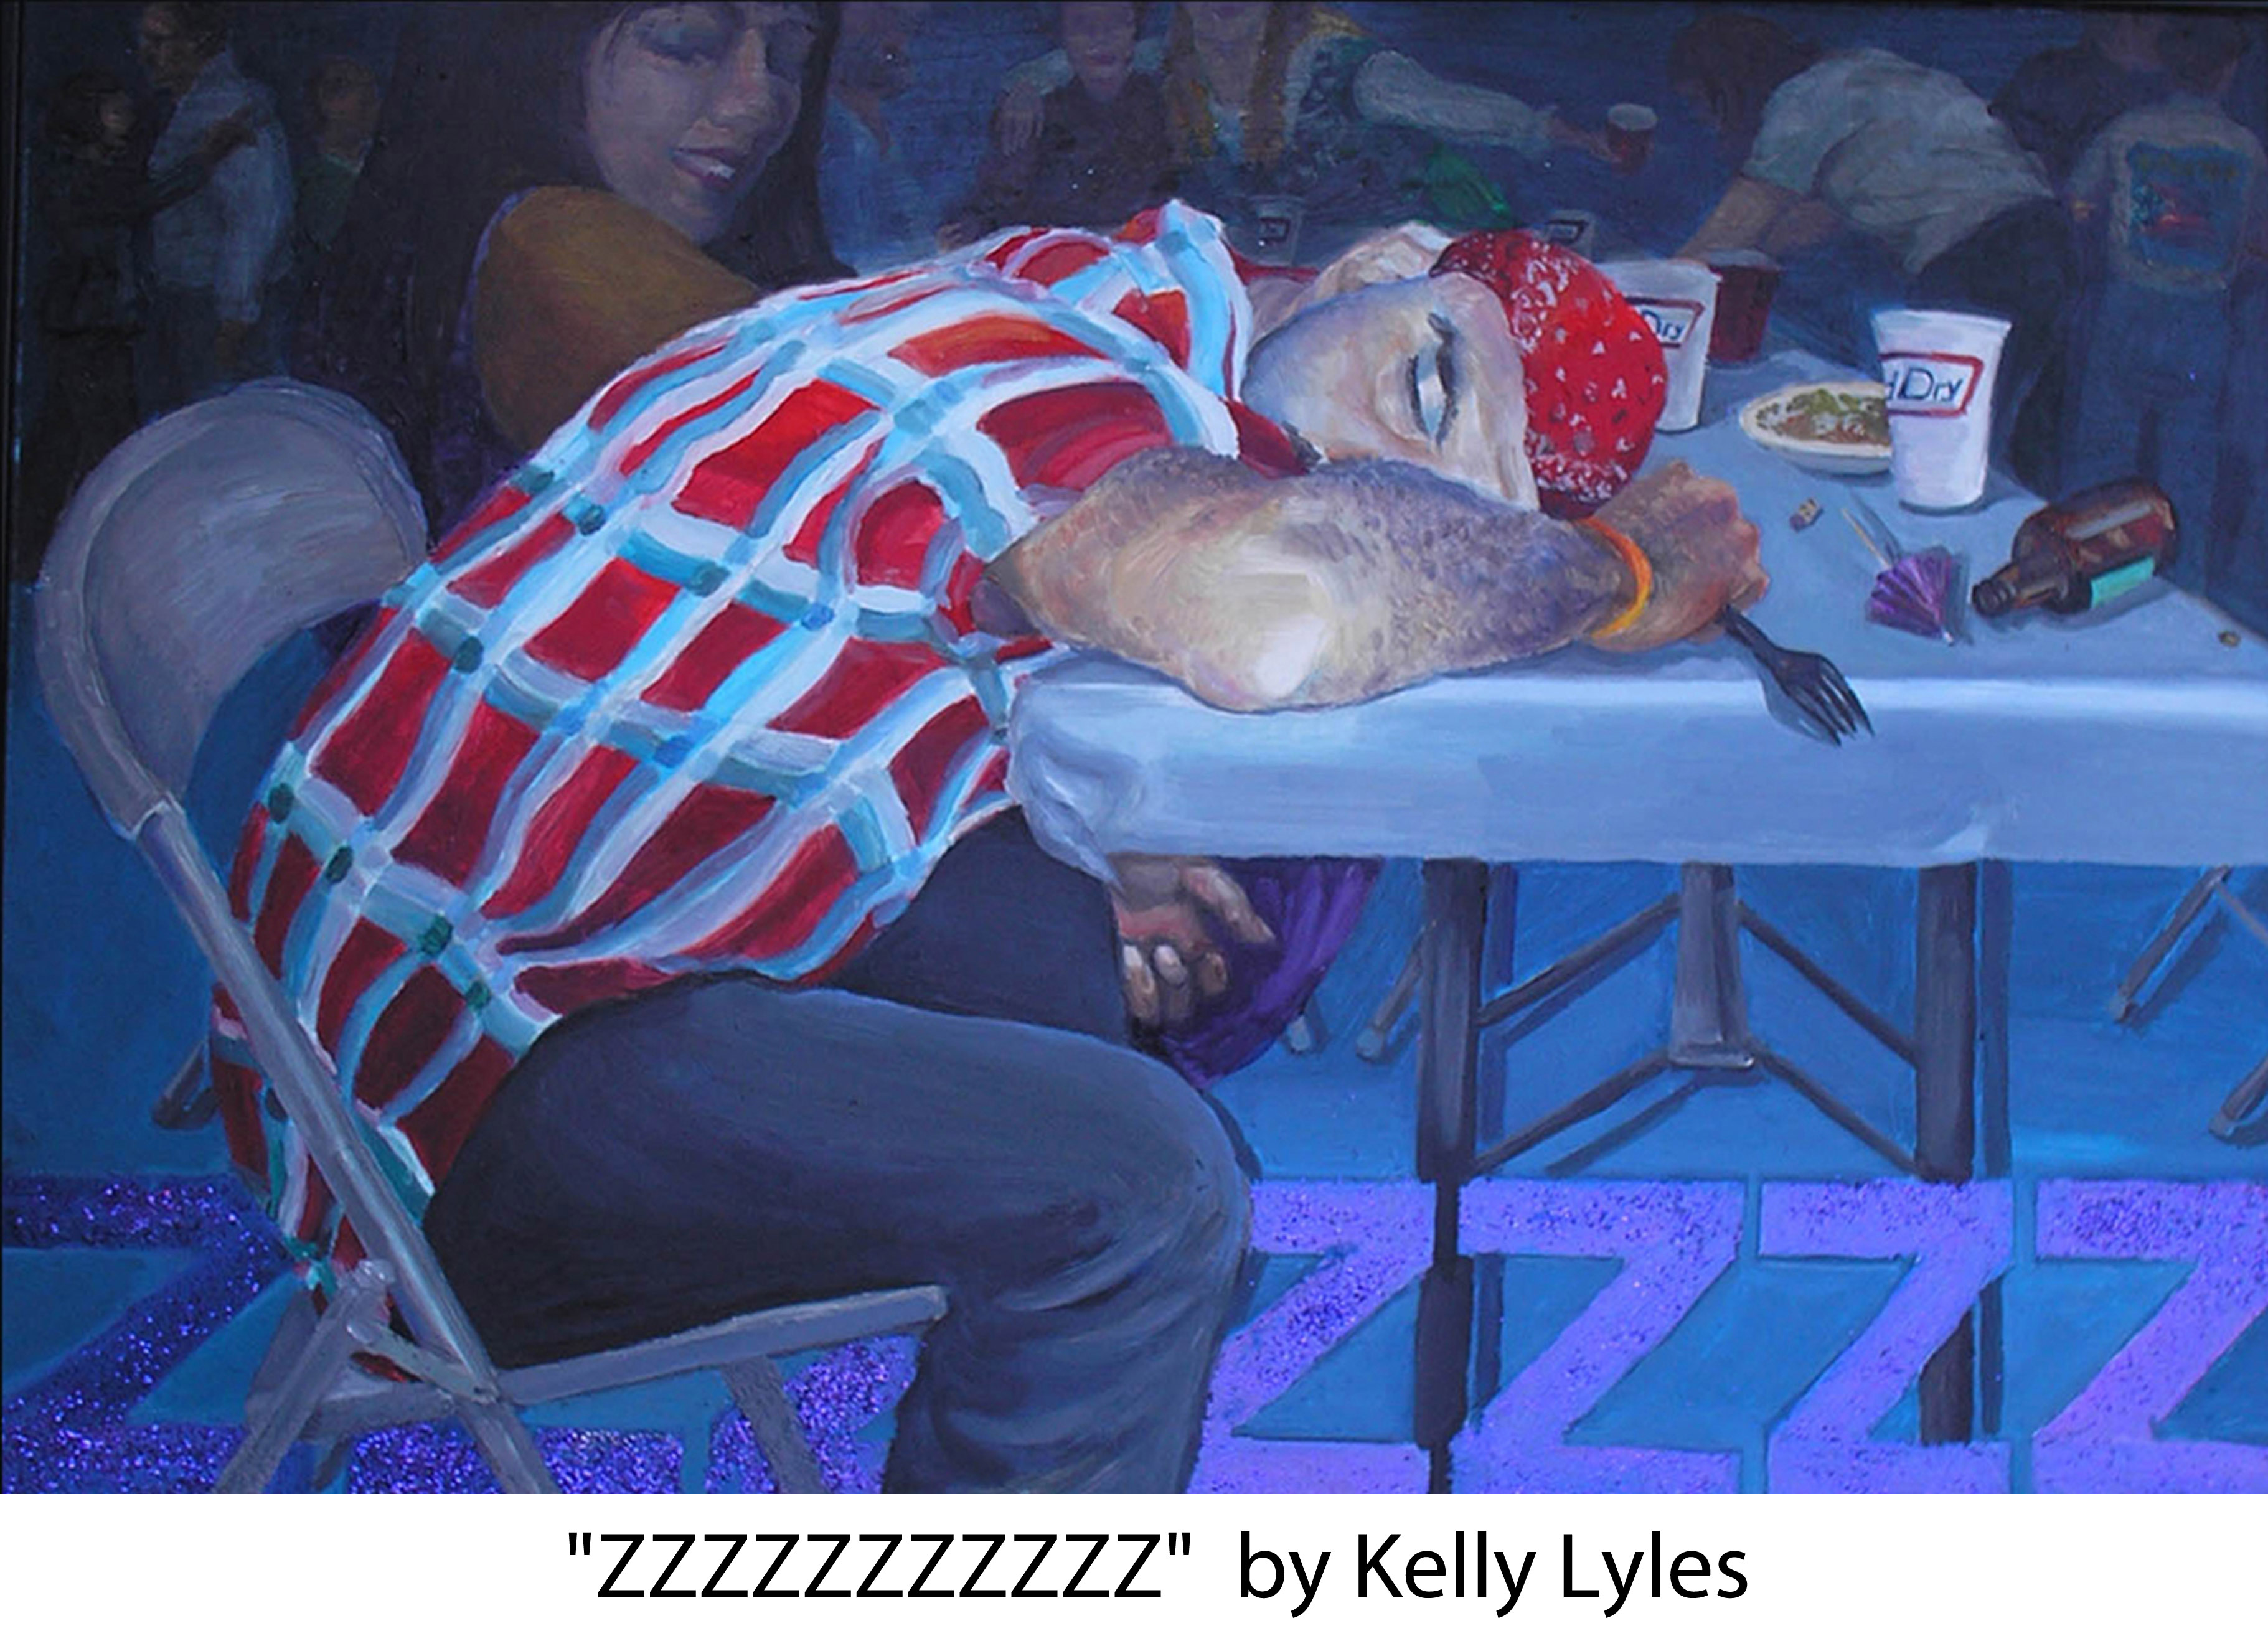 Kelly Lyles